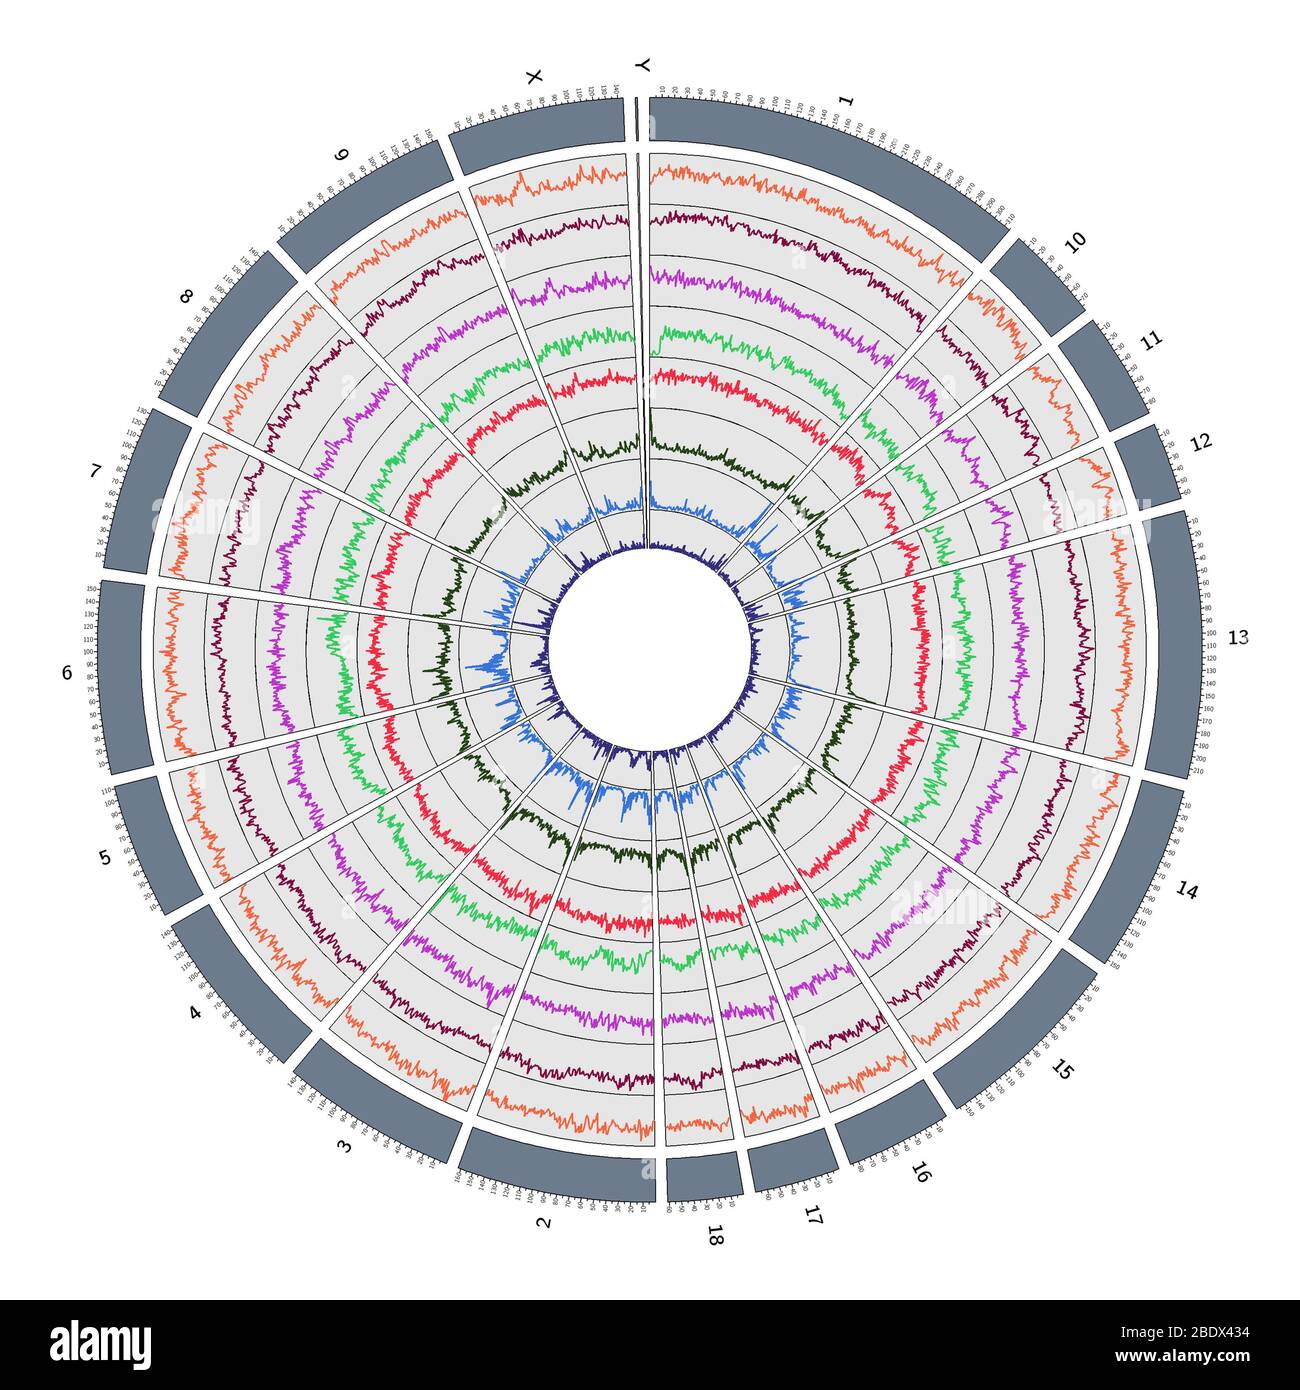 Circos, Circular Genome Map, Pig Stock Photo